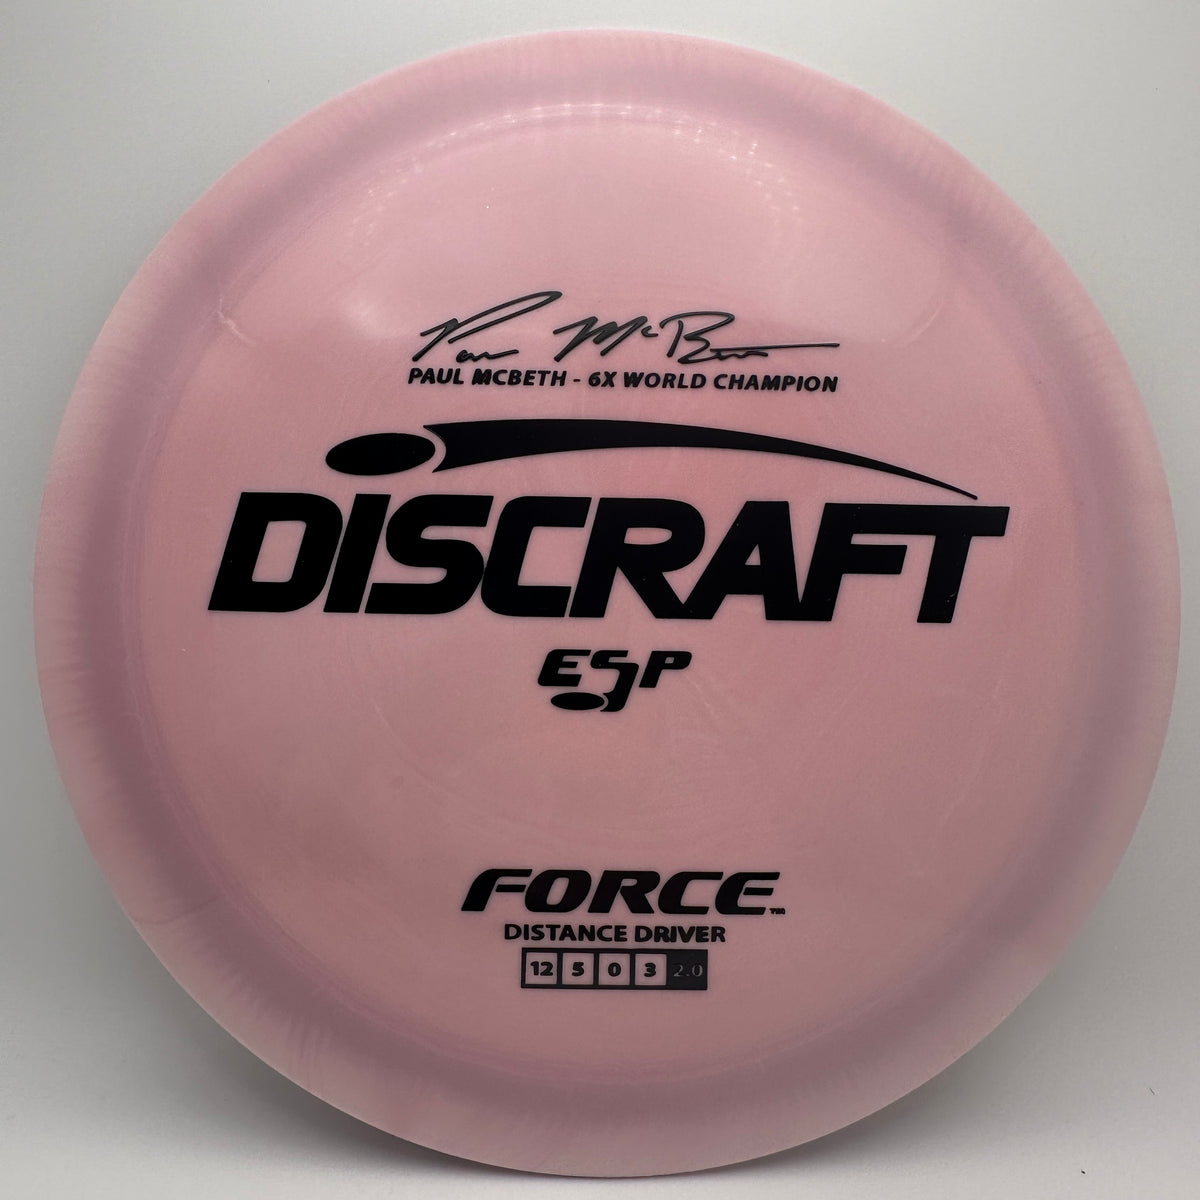 Discraft Force - ESP Paul Mcbeth 6x World Champion